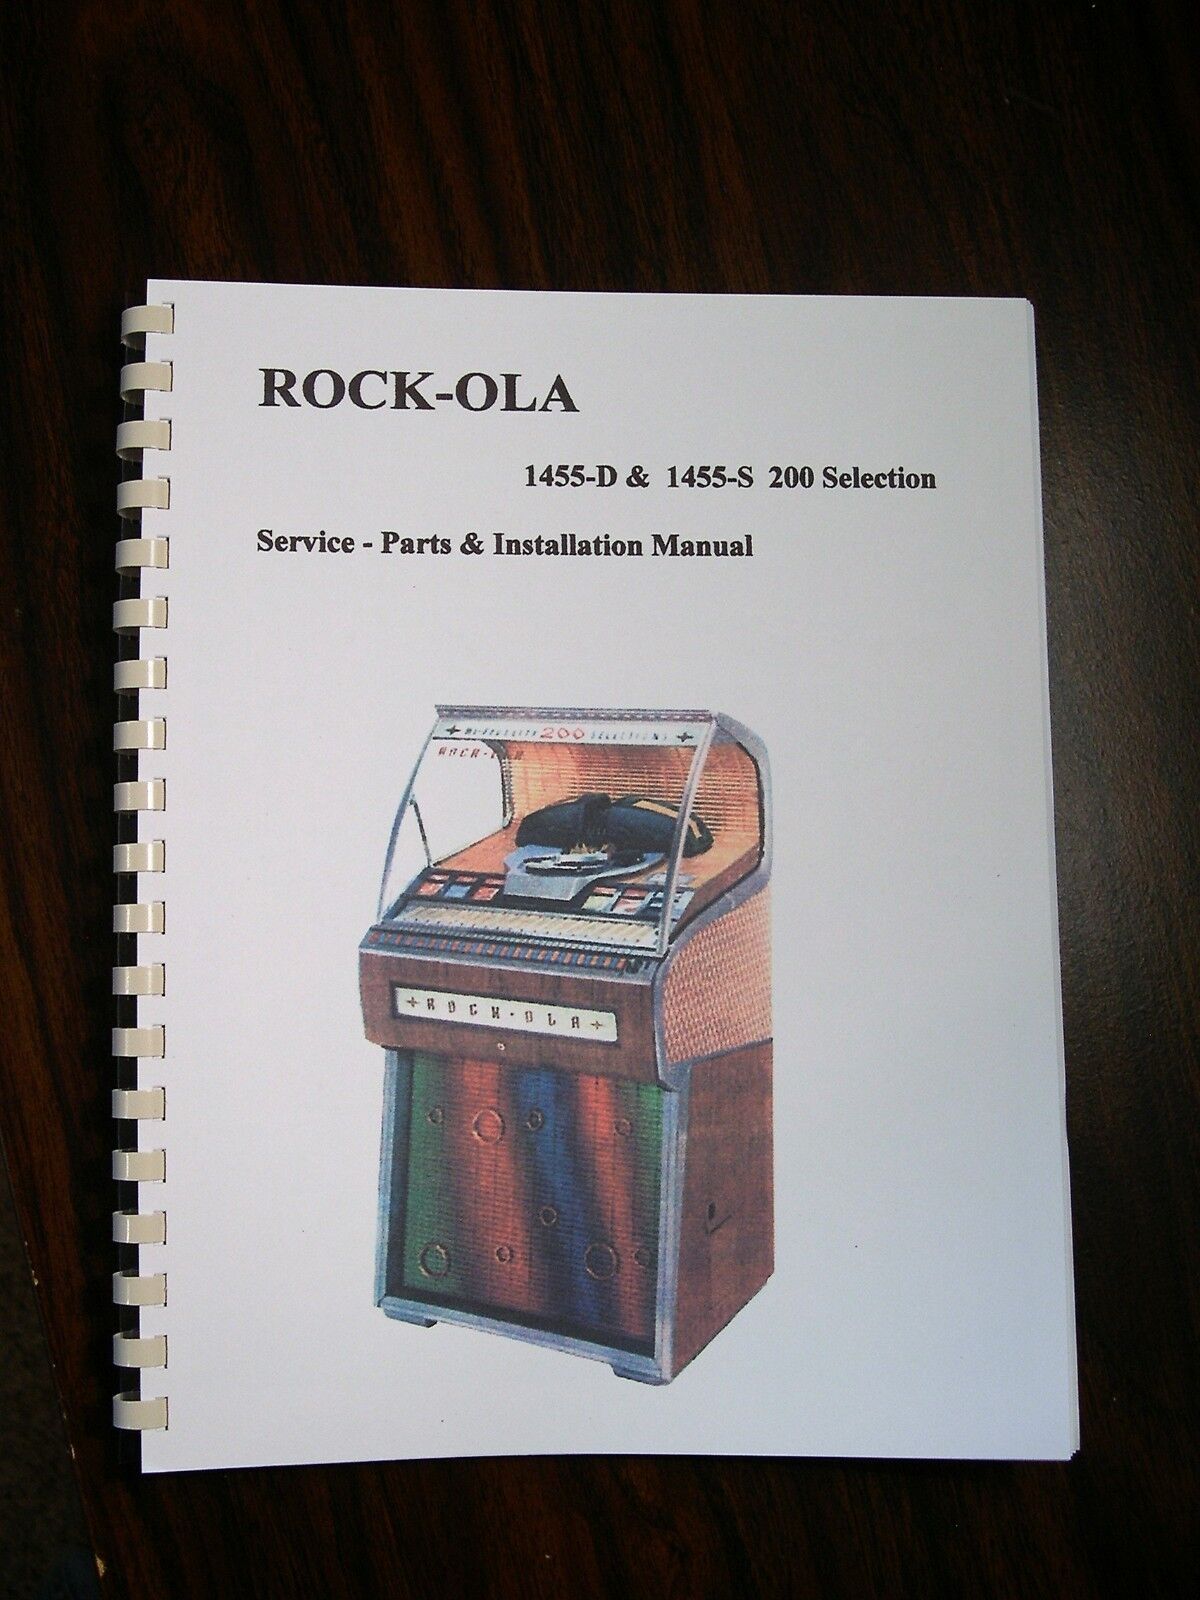 Rock-ola 1455-D & 1455-S Jukebox Service & Parts Manual